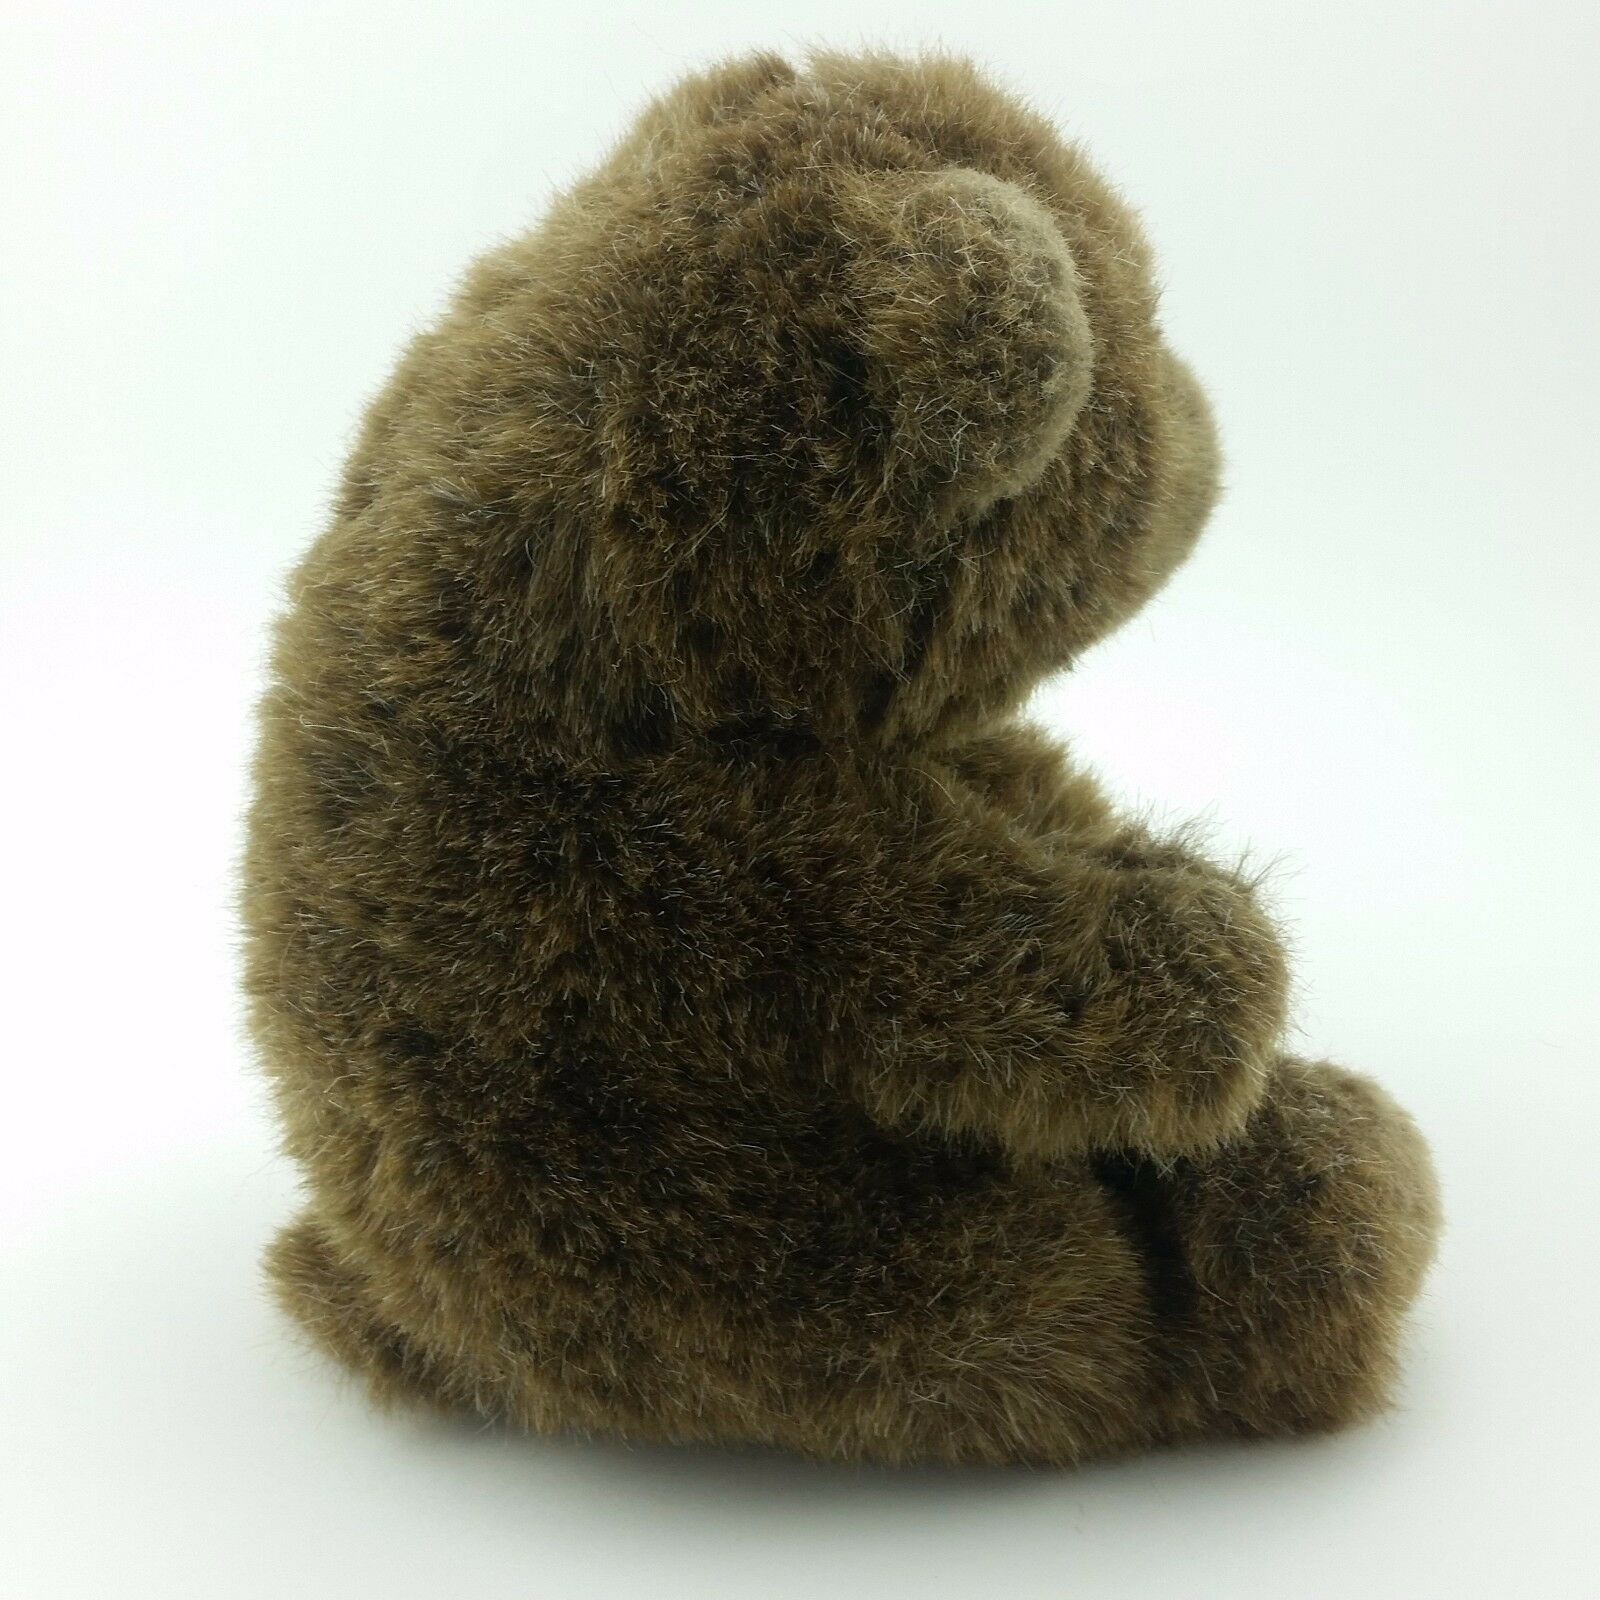 Vintage Teddy Bear Plush Pot Belly Potbelly Stuffed Animal Toy Doll Ch ...